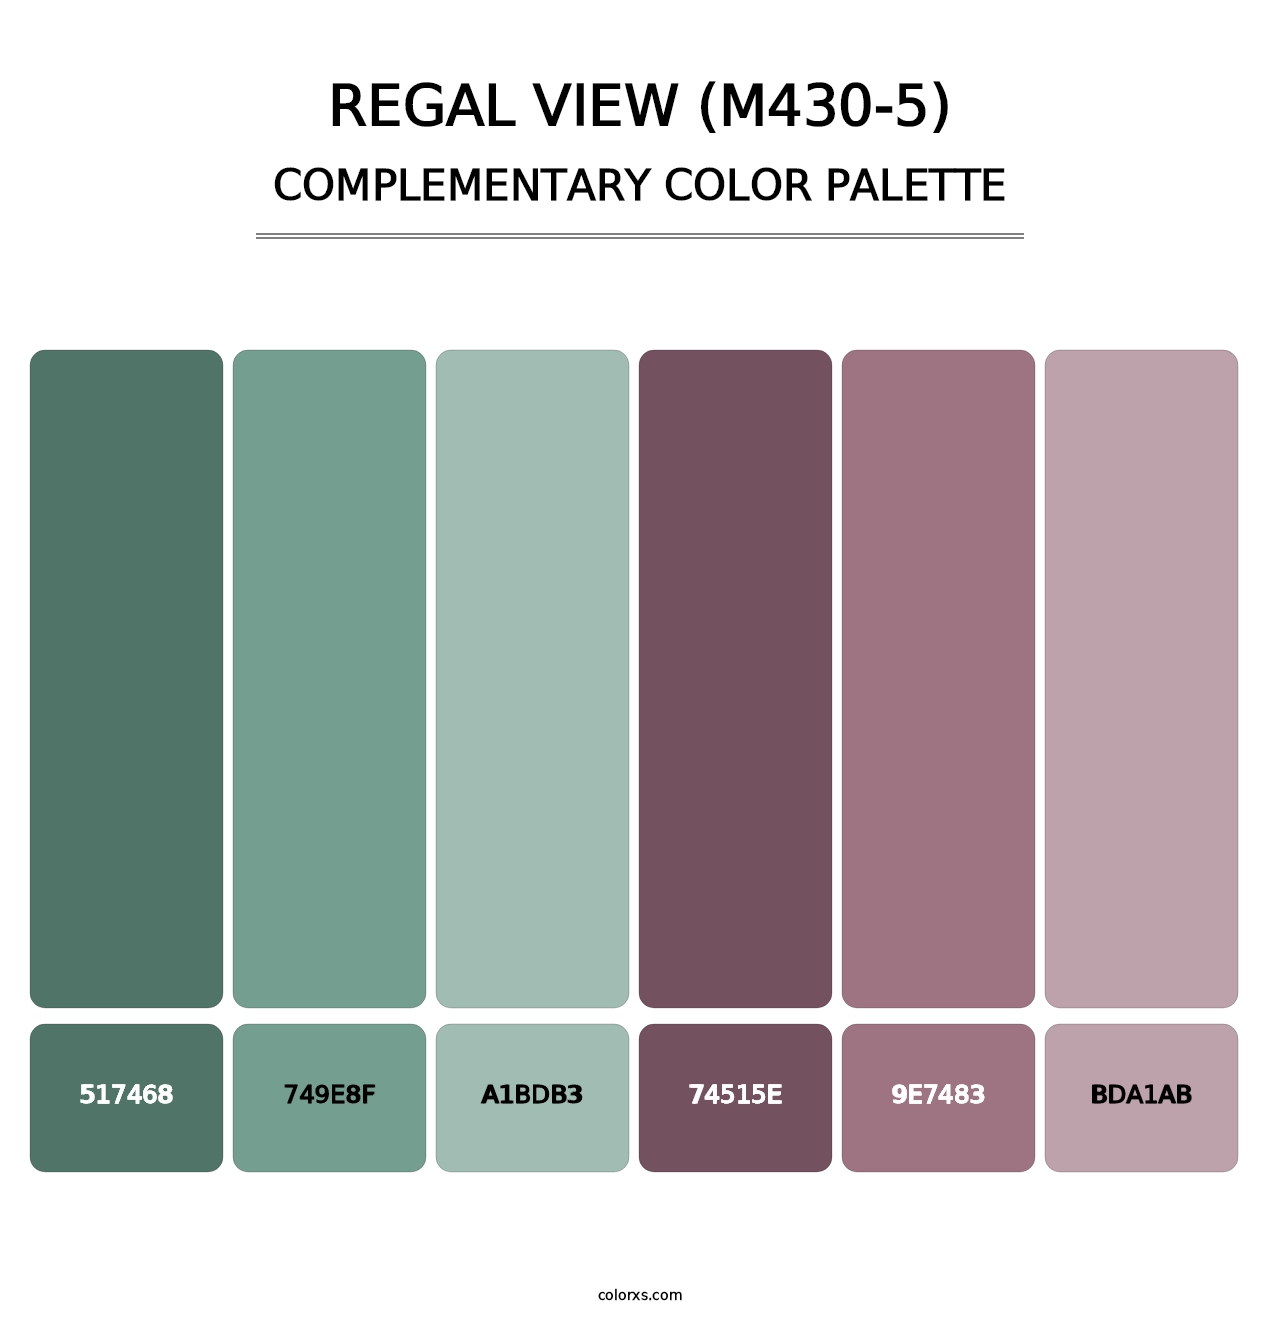 Regal View (M430-5) - Complementary Color Palette